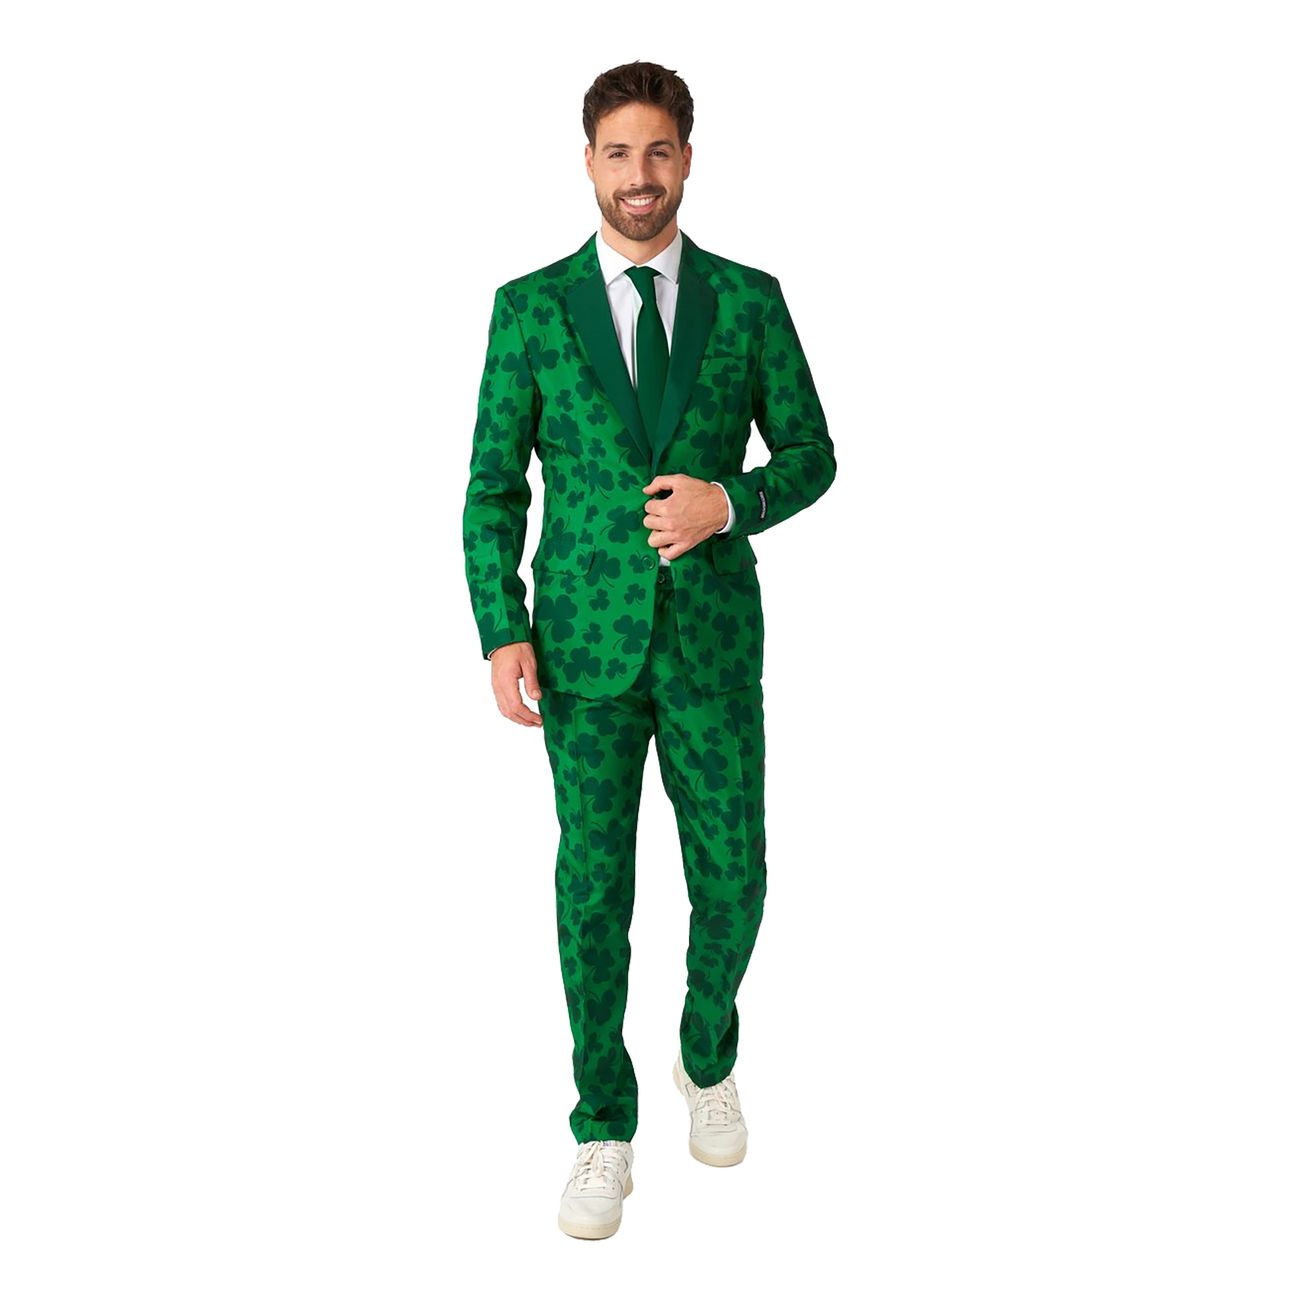 suitmeister-st-patrick-gron-kostym-89999-1